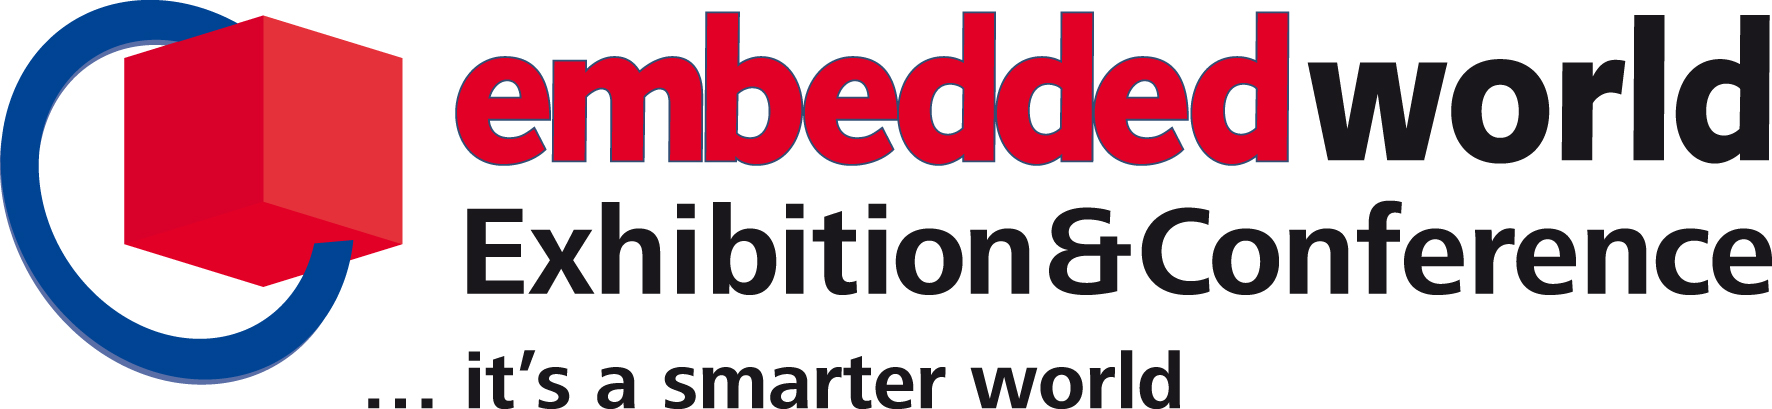 embedded-world2014